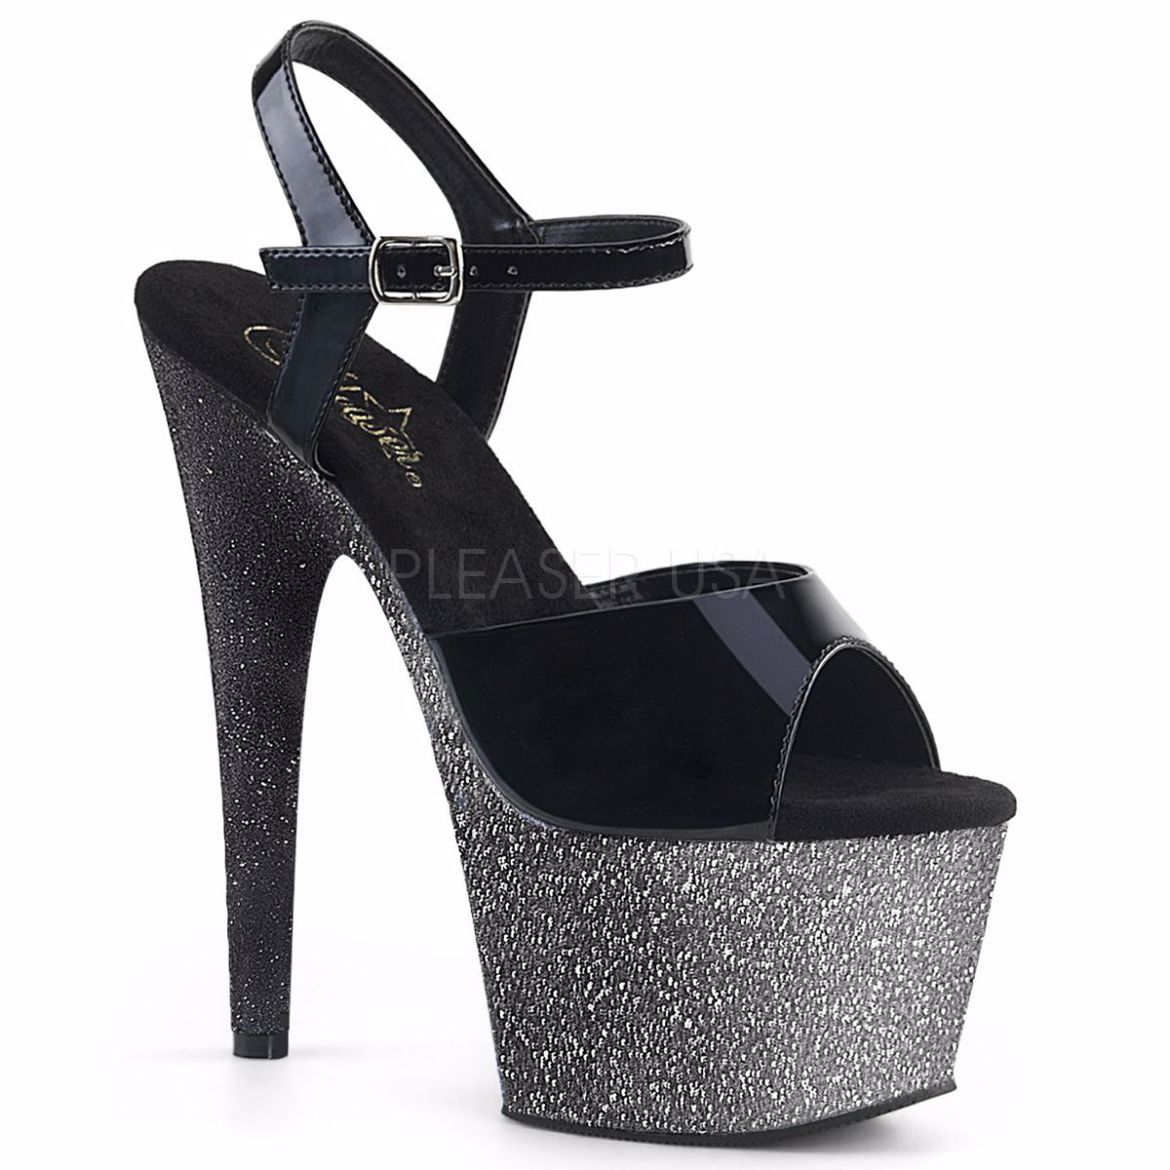 Product image of Pleaser Adore-709Ombre Black Patent/Silver-Black Ombre, 7 inch (17.8 cm) Heel, 2 3/4 inch (7 cm) Platform Sandal Shoes